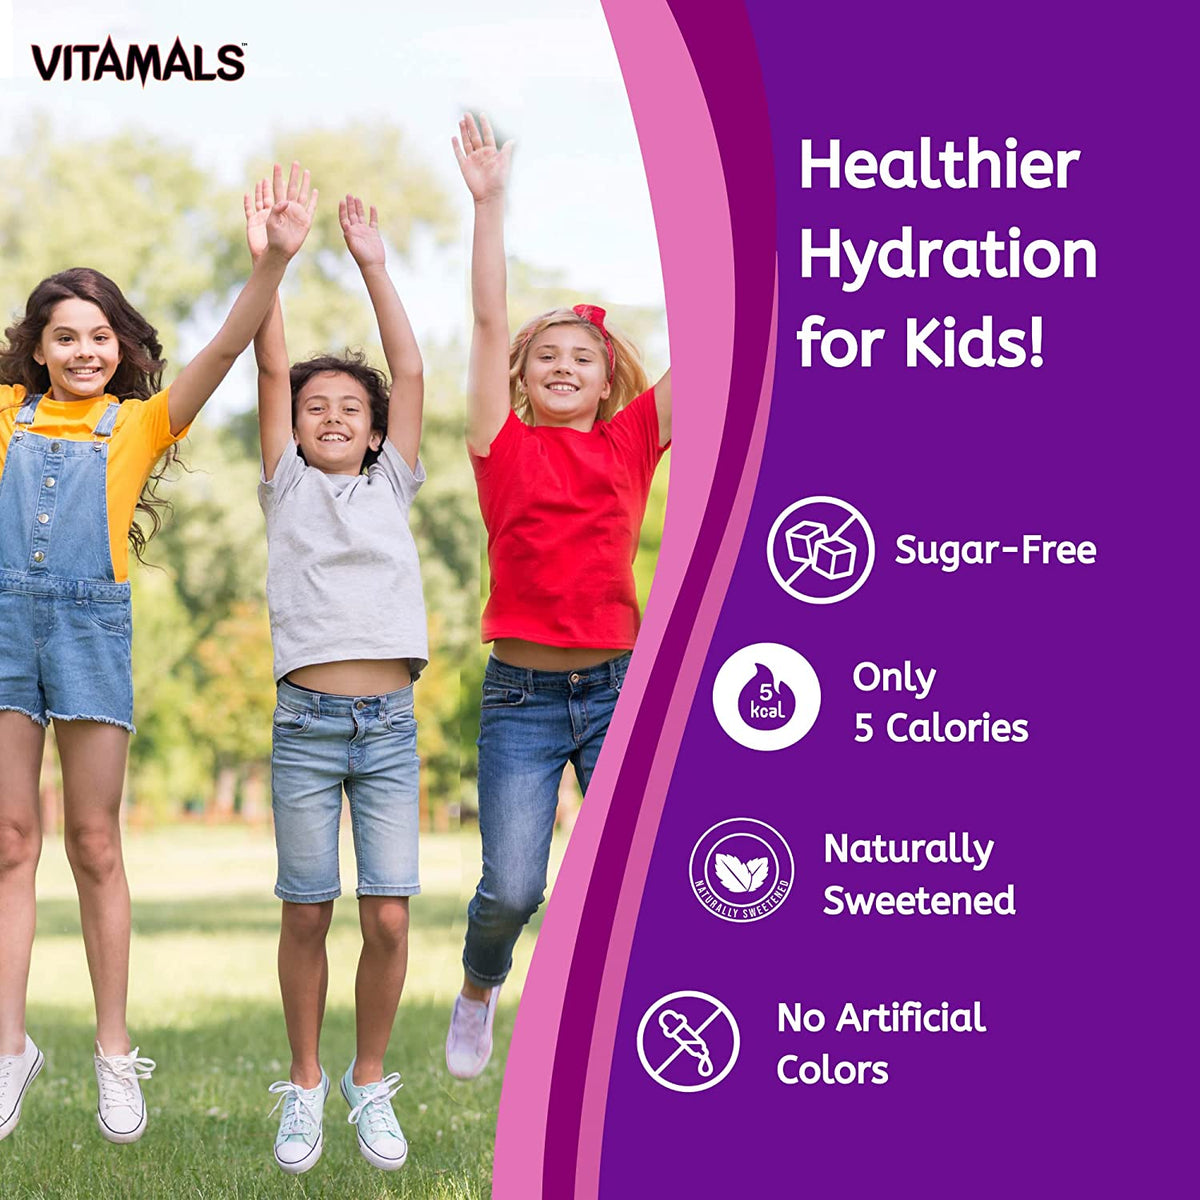 Vitamals Enhanced Flavored Water - Gorilla Grape - 12 fl oz (Pack of 6)